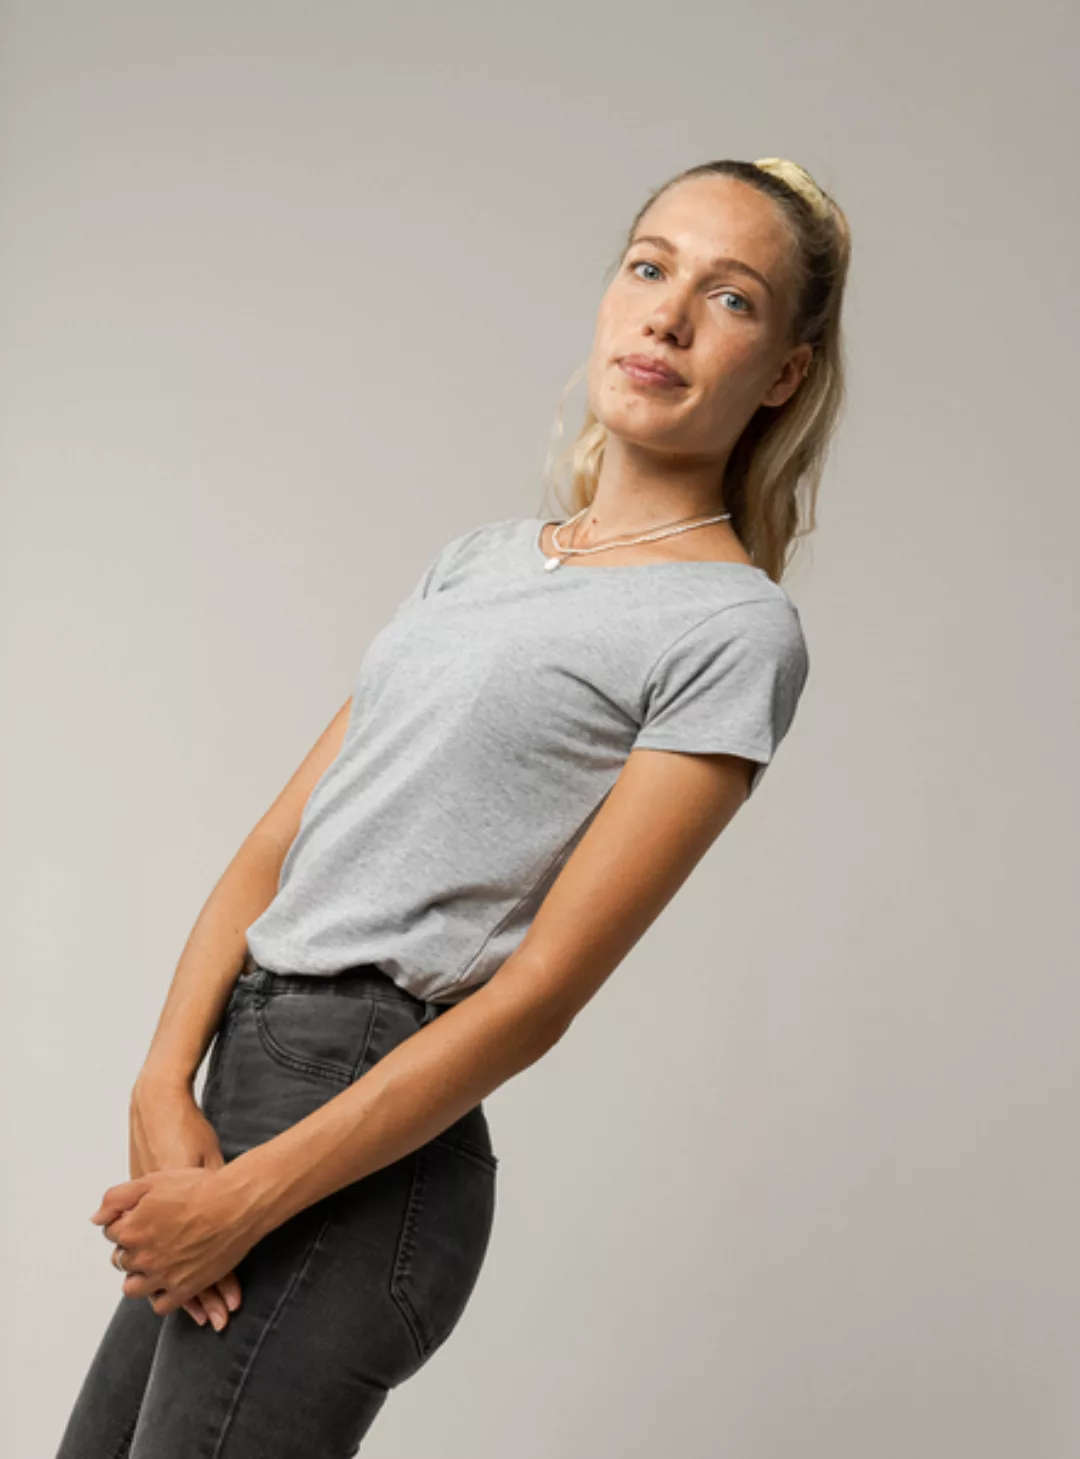 Damen T-shirt In Melange-farben - Fairtrade & Gots Zertifiziert günstig online kaufen